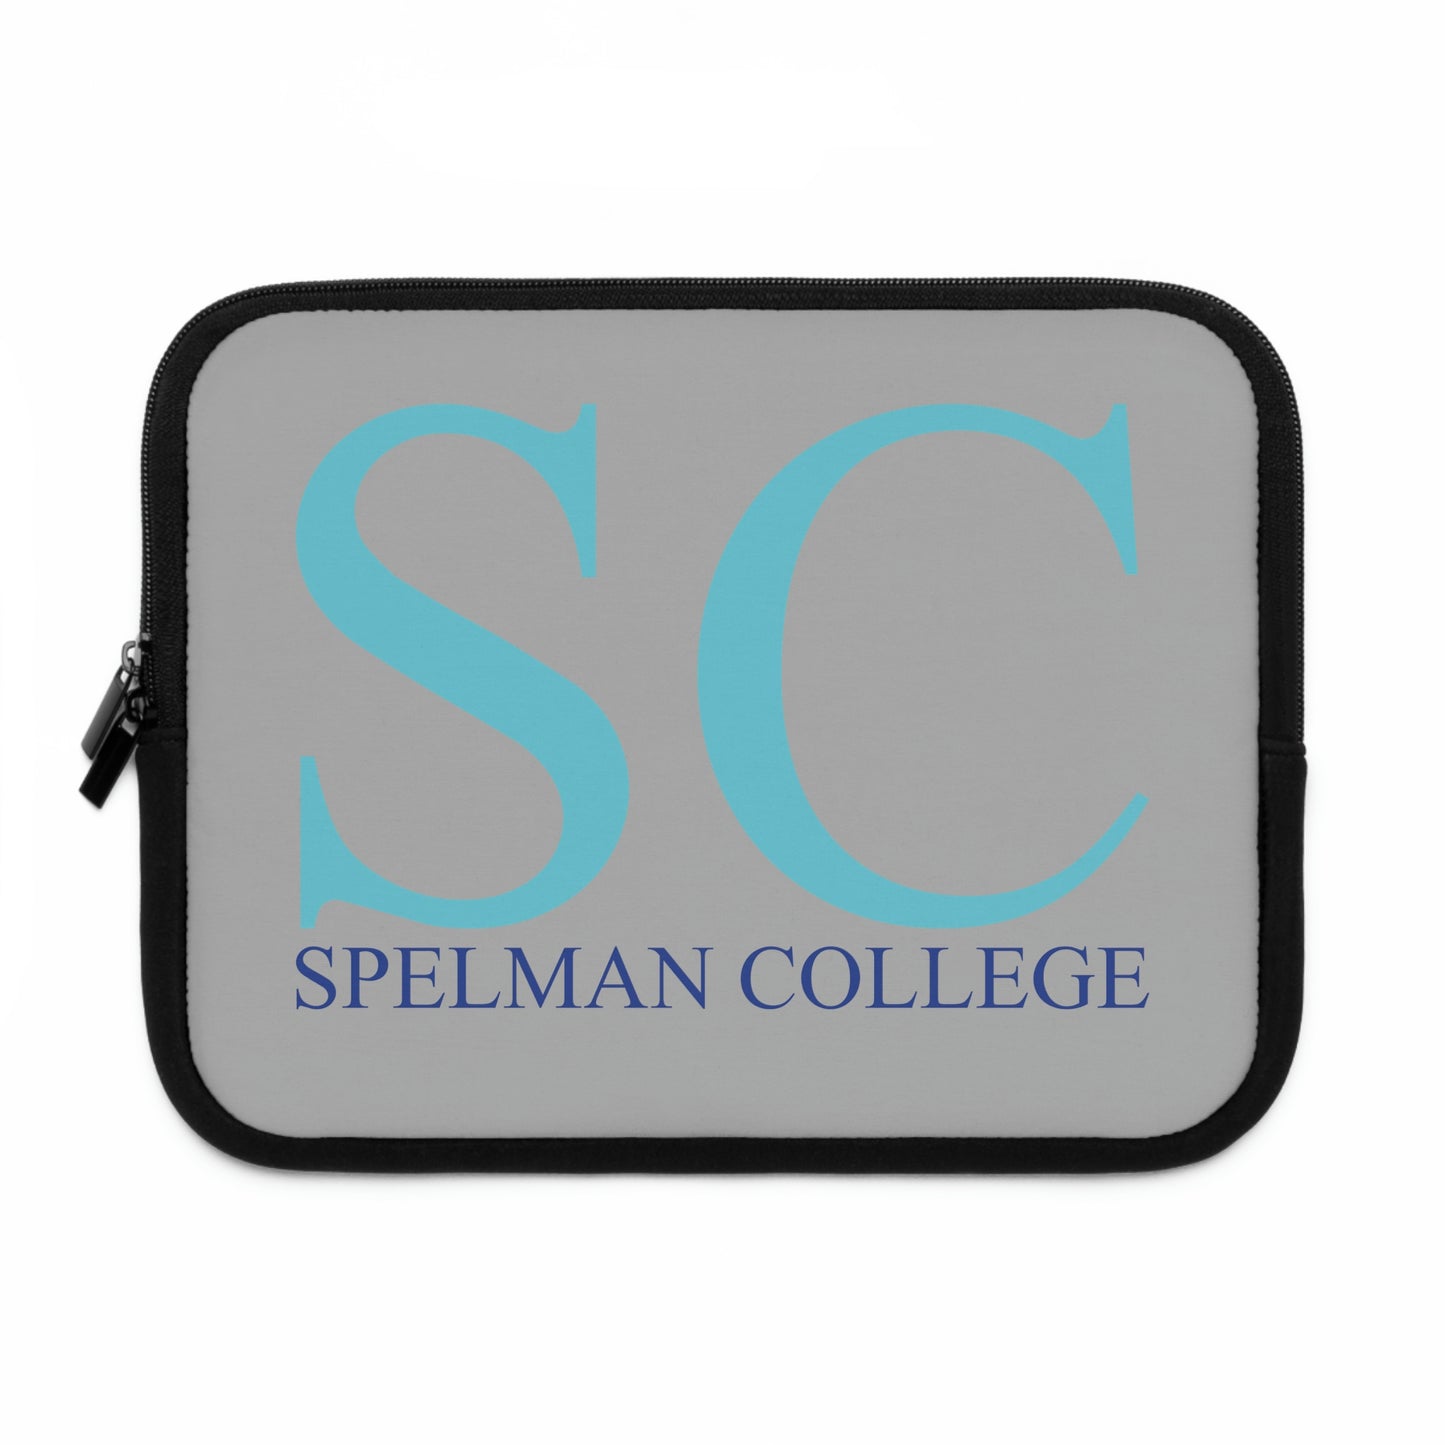 HBCU Love (Spelman College/ Laptop Sleeve)